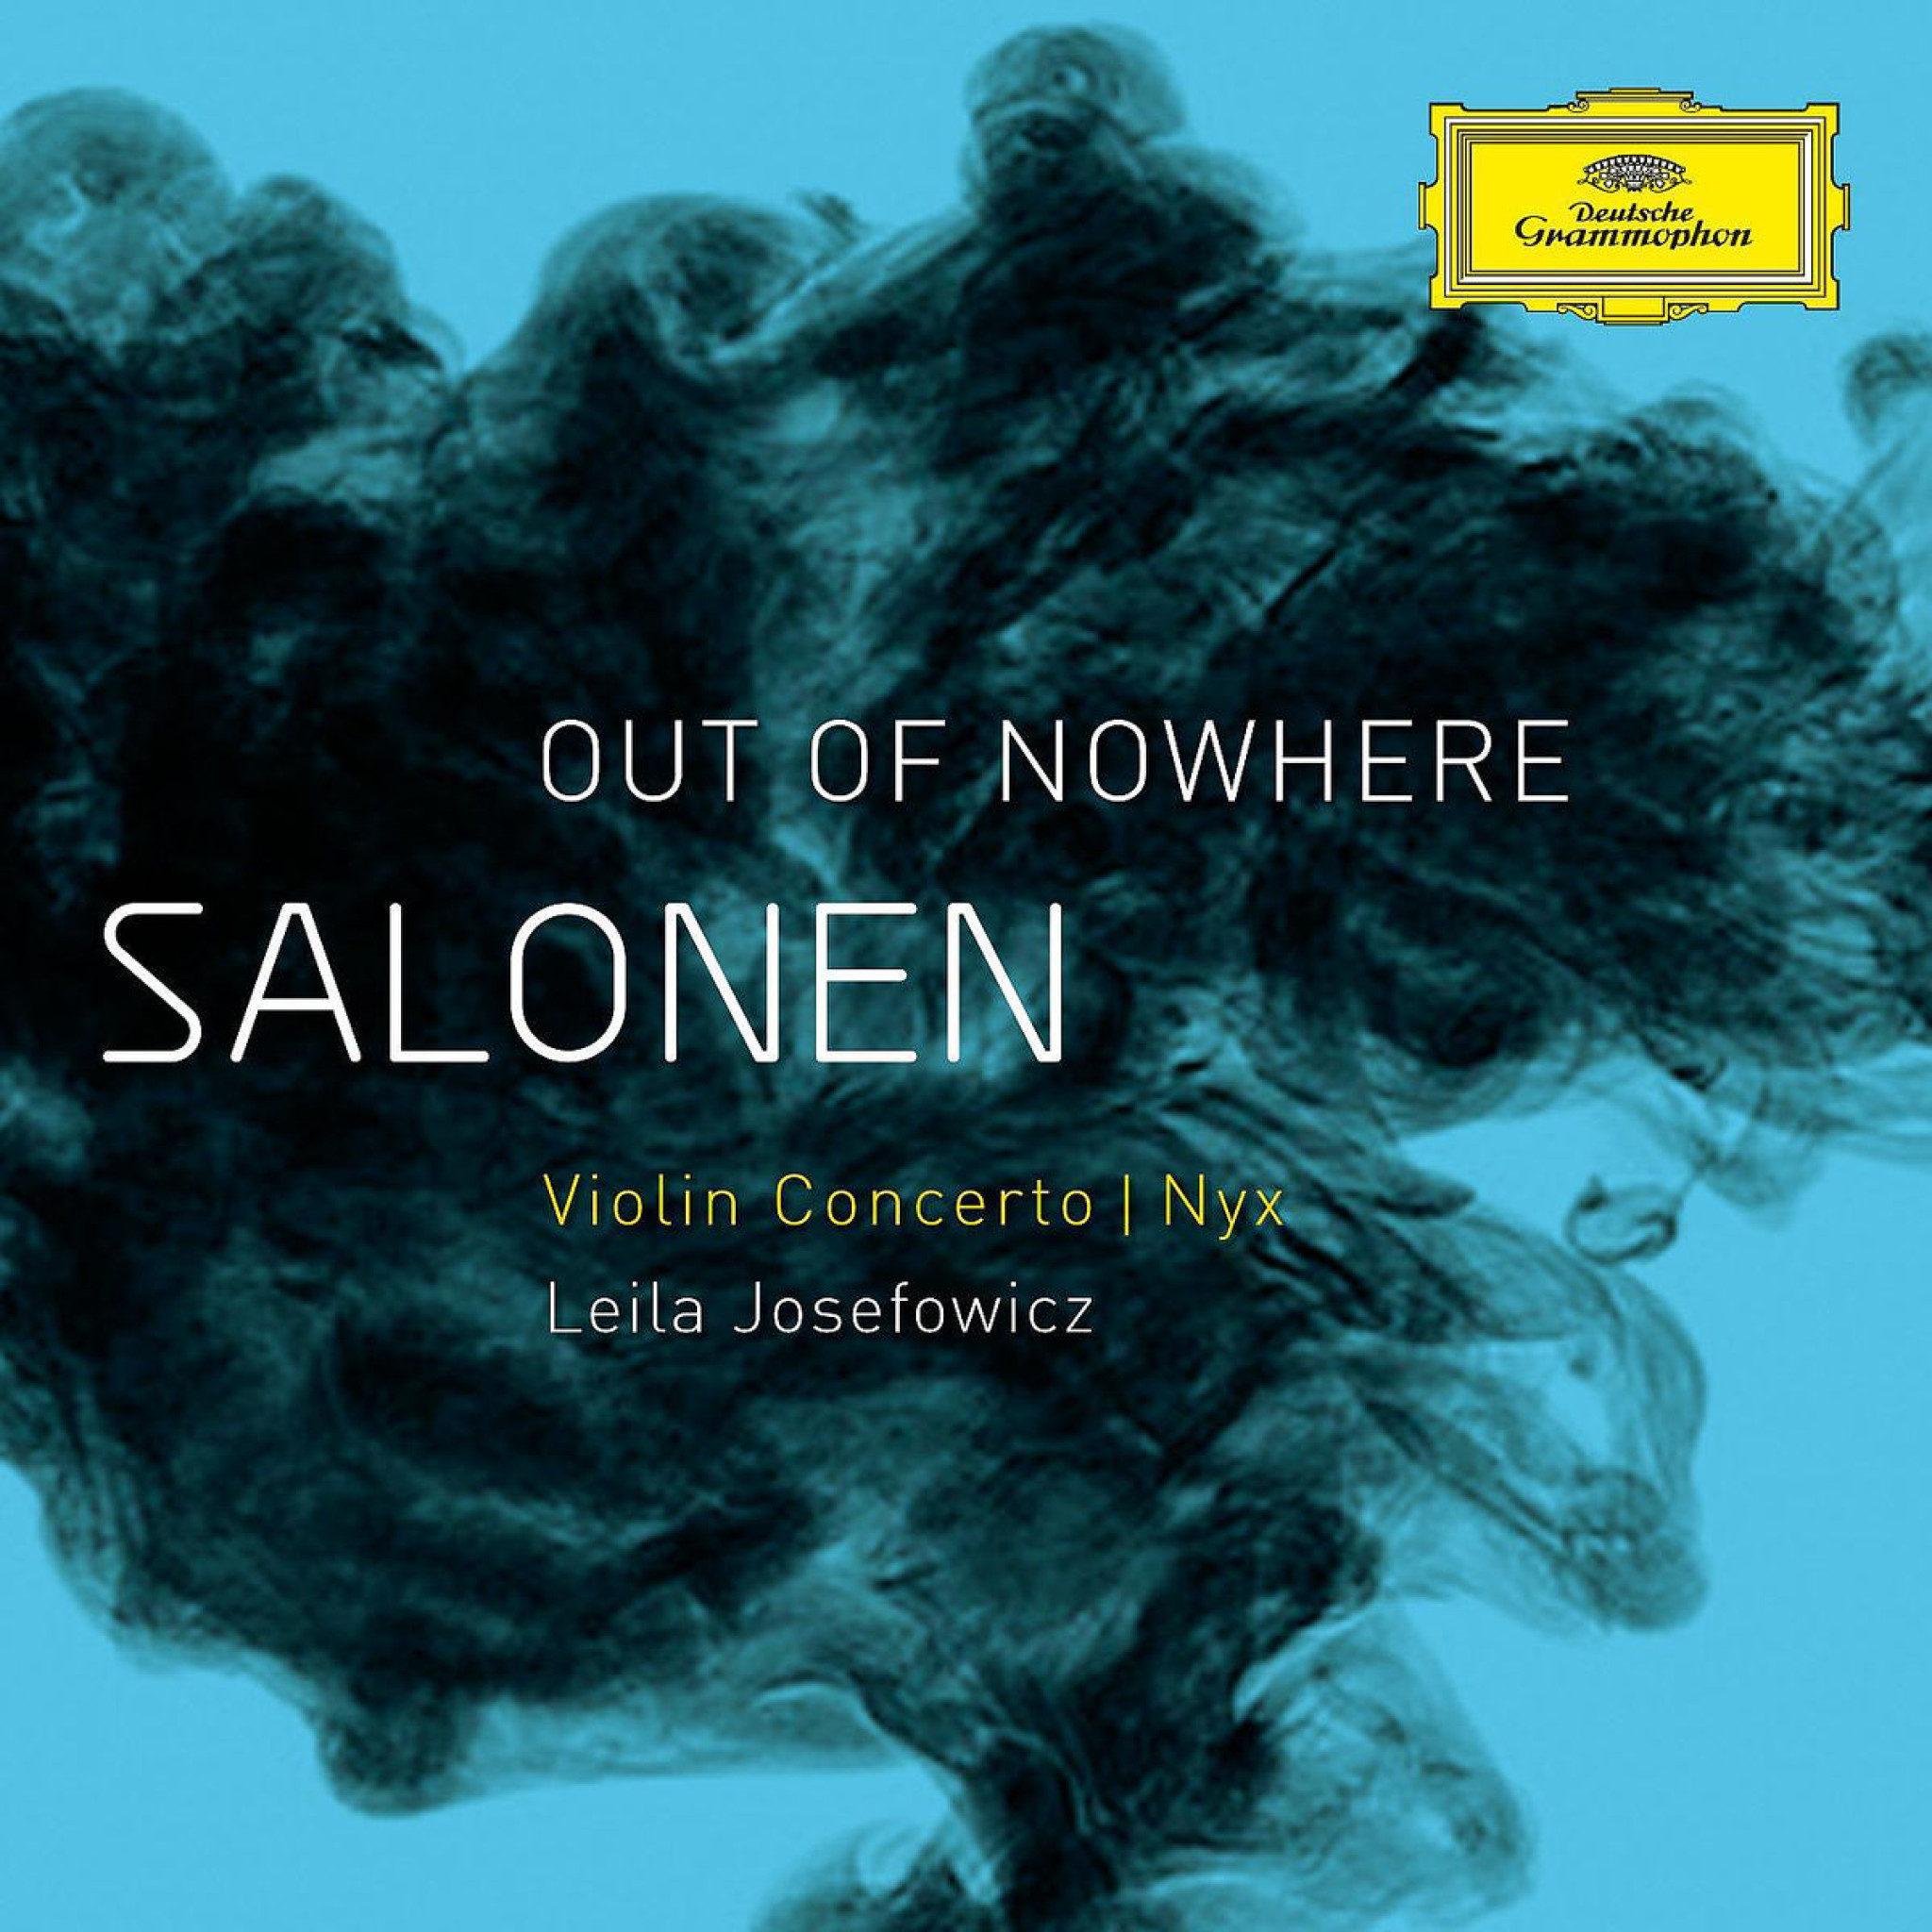 Salonen: "Out Of Nowhere" - Violin Concerto (2009); Nyx (2011)